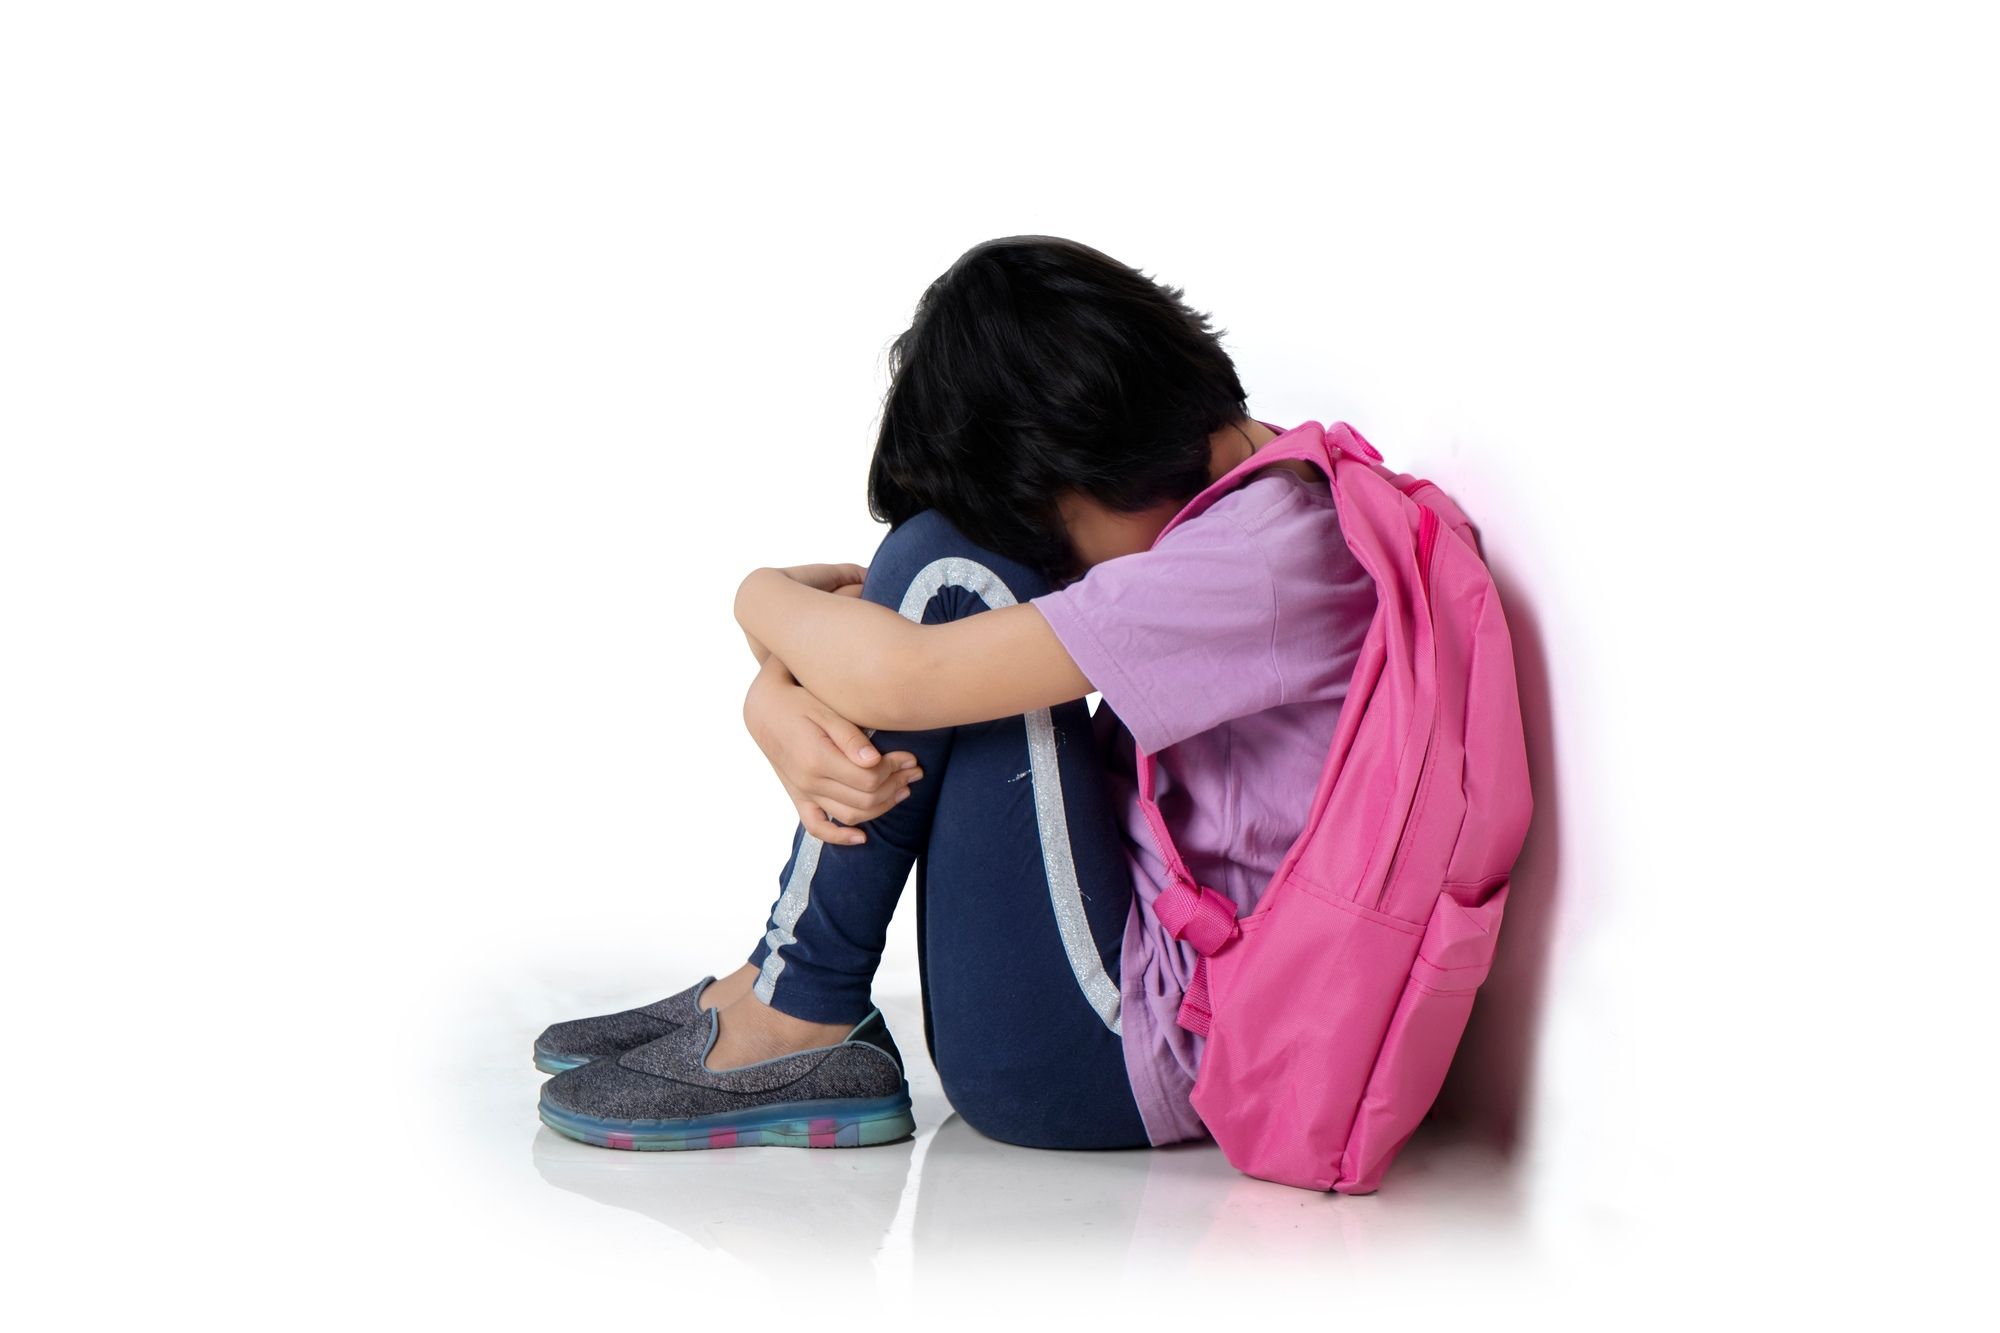 sad little girl regarding the foster children class action lawsuit filed after social worker stole money